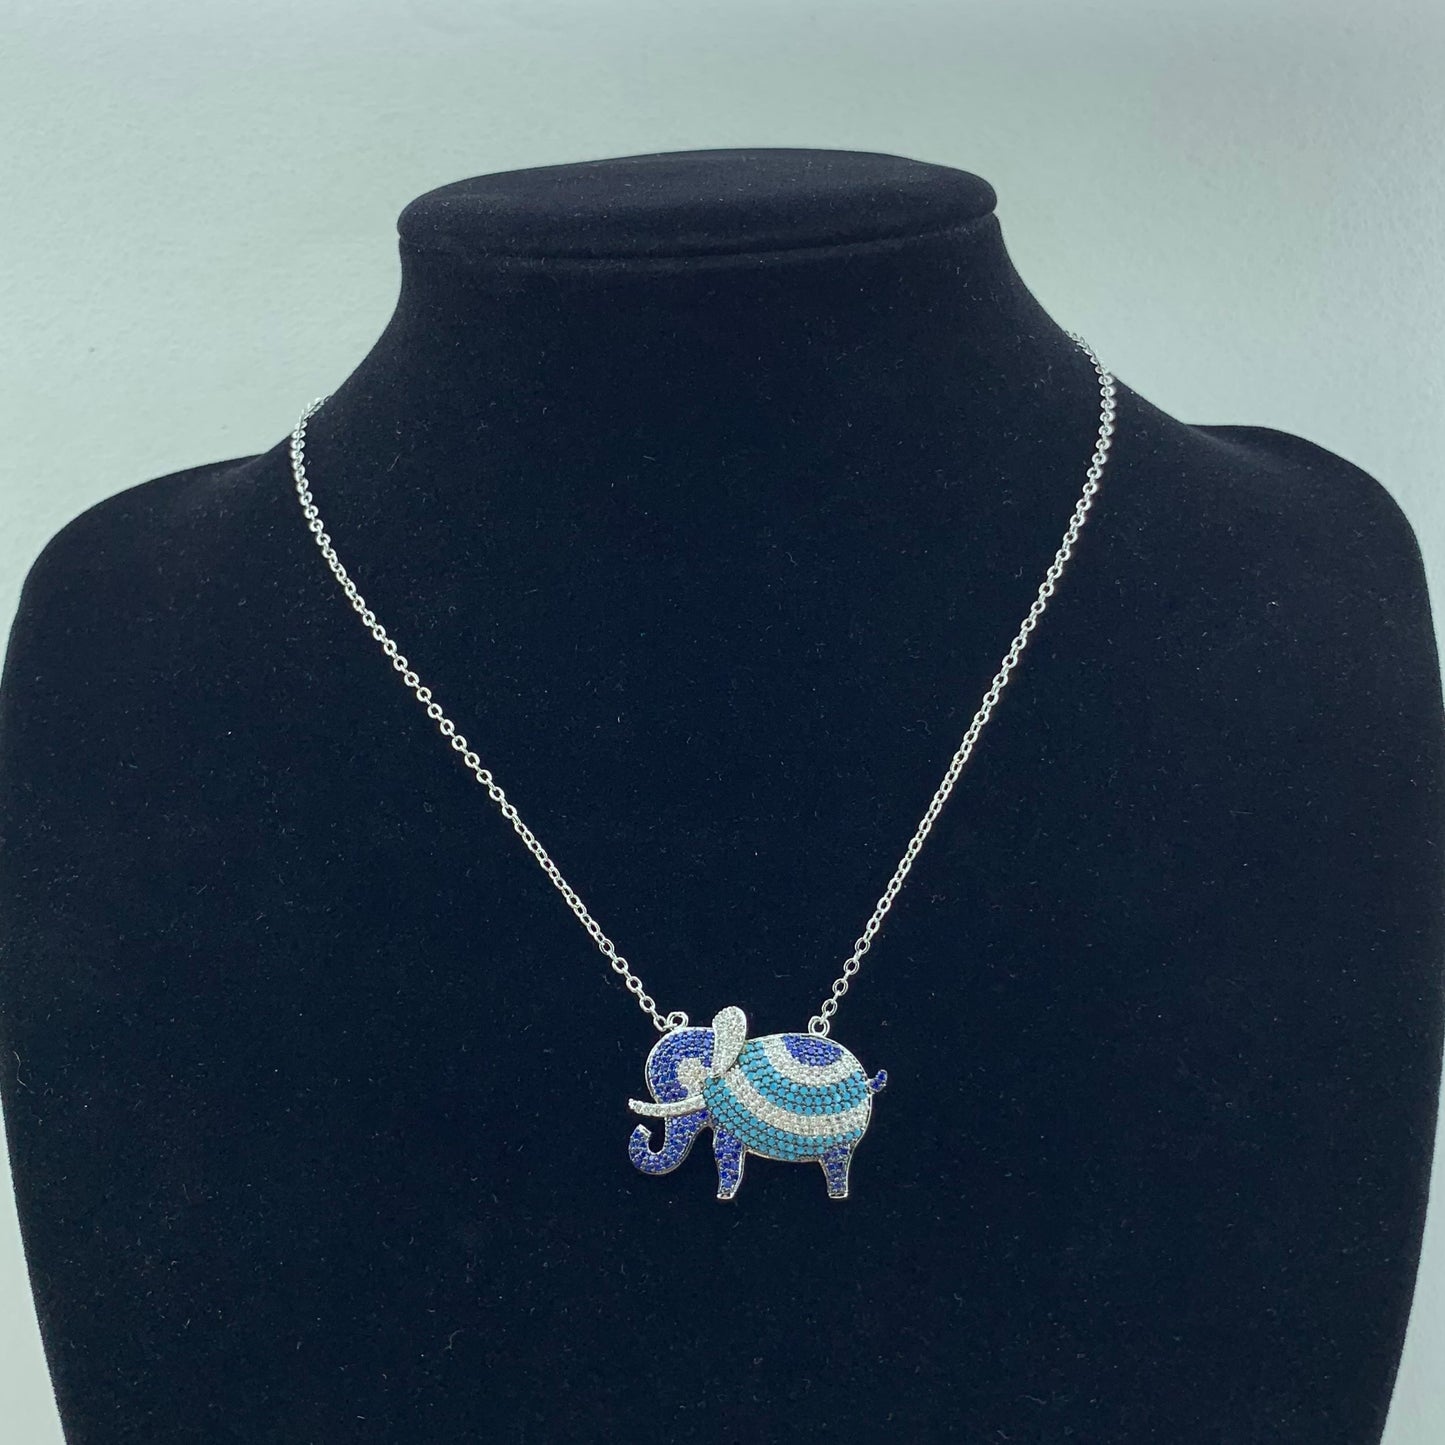 Women's Fashion Animal Elephant CZ Necklace